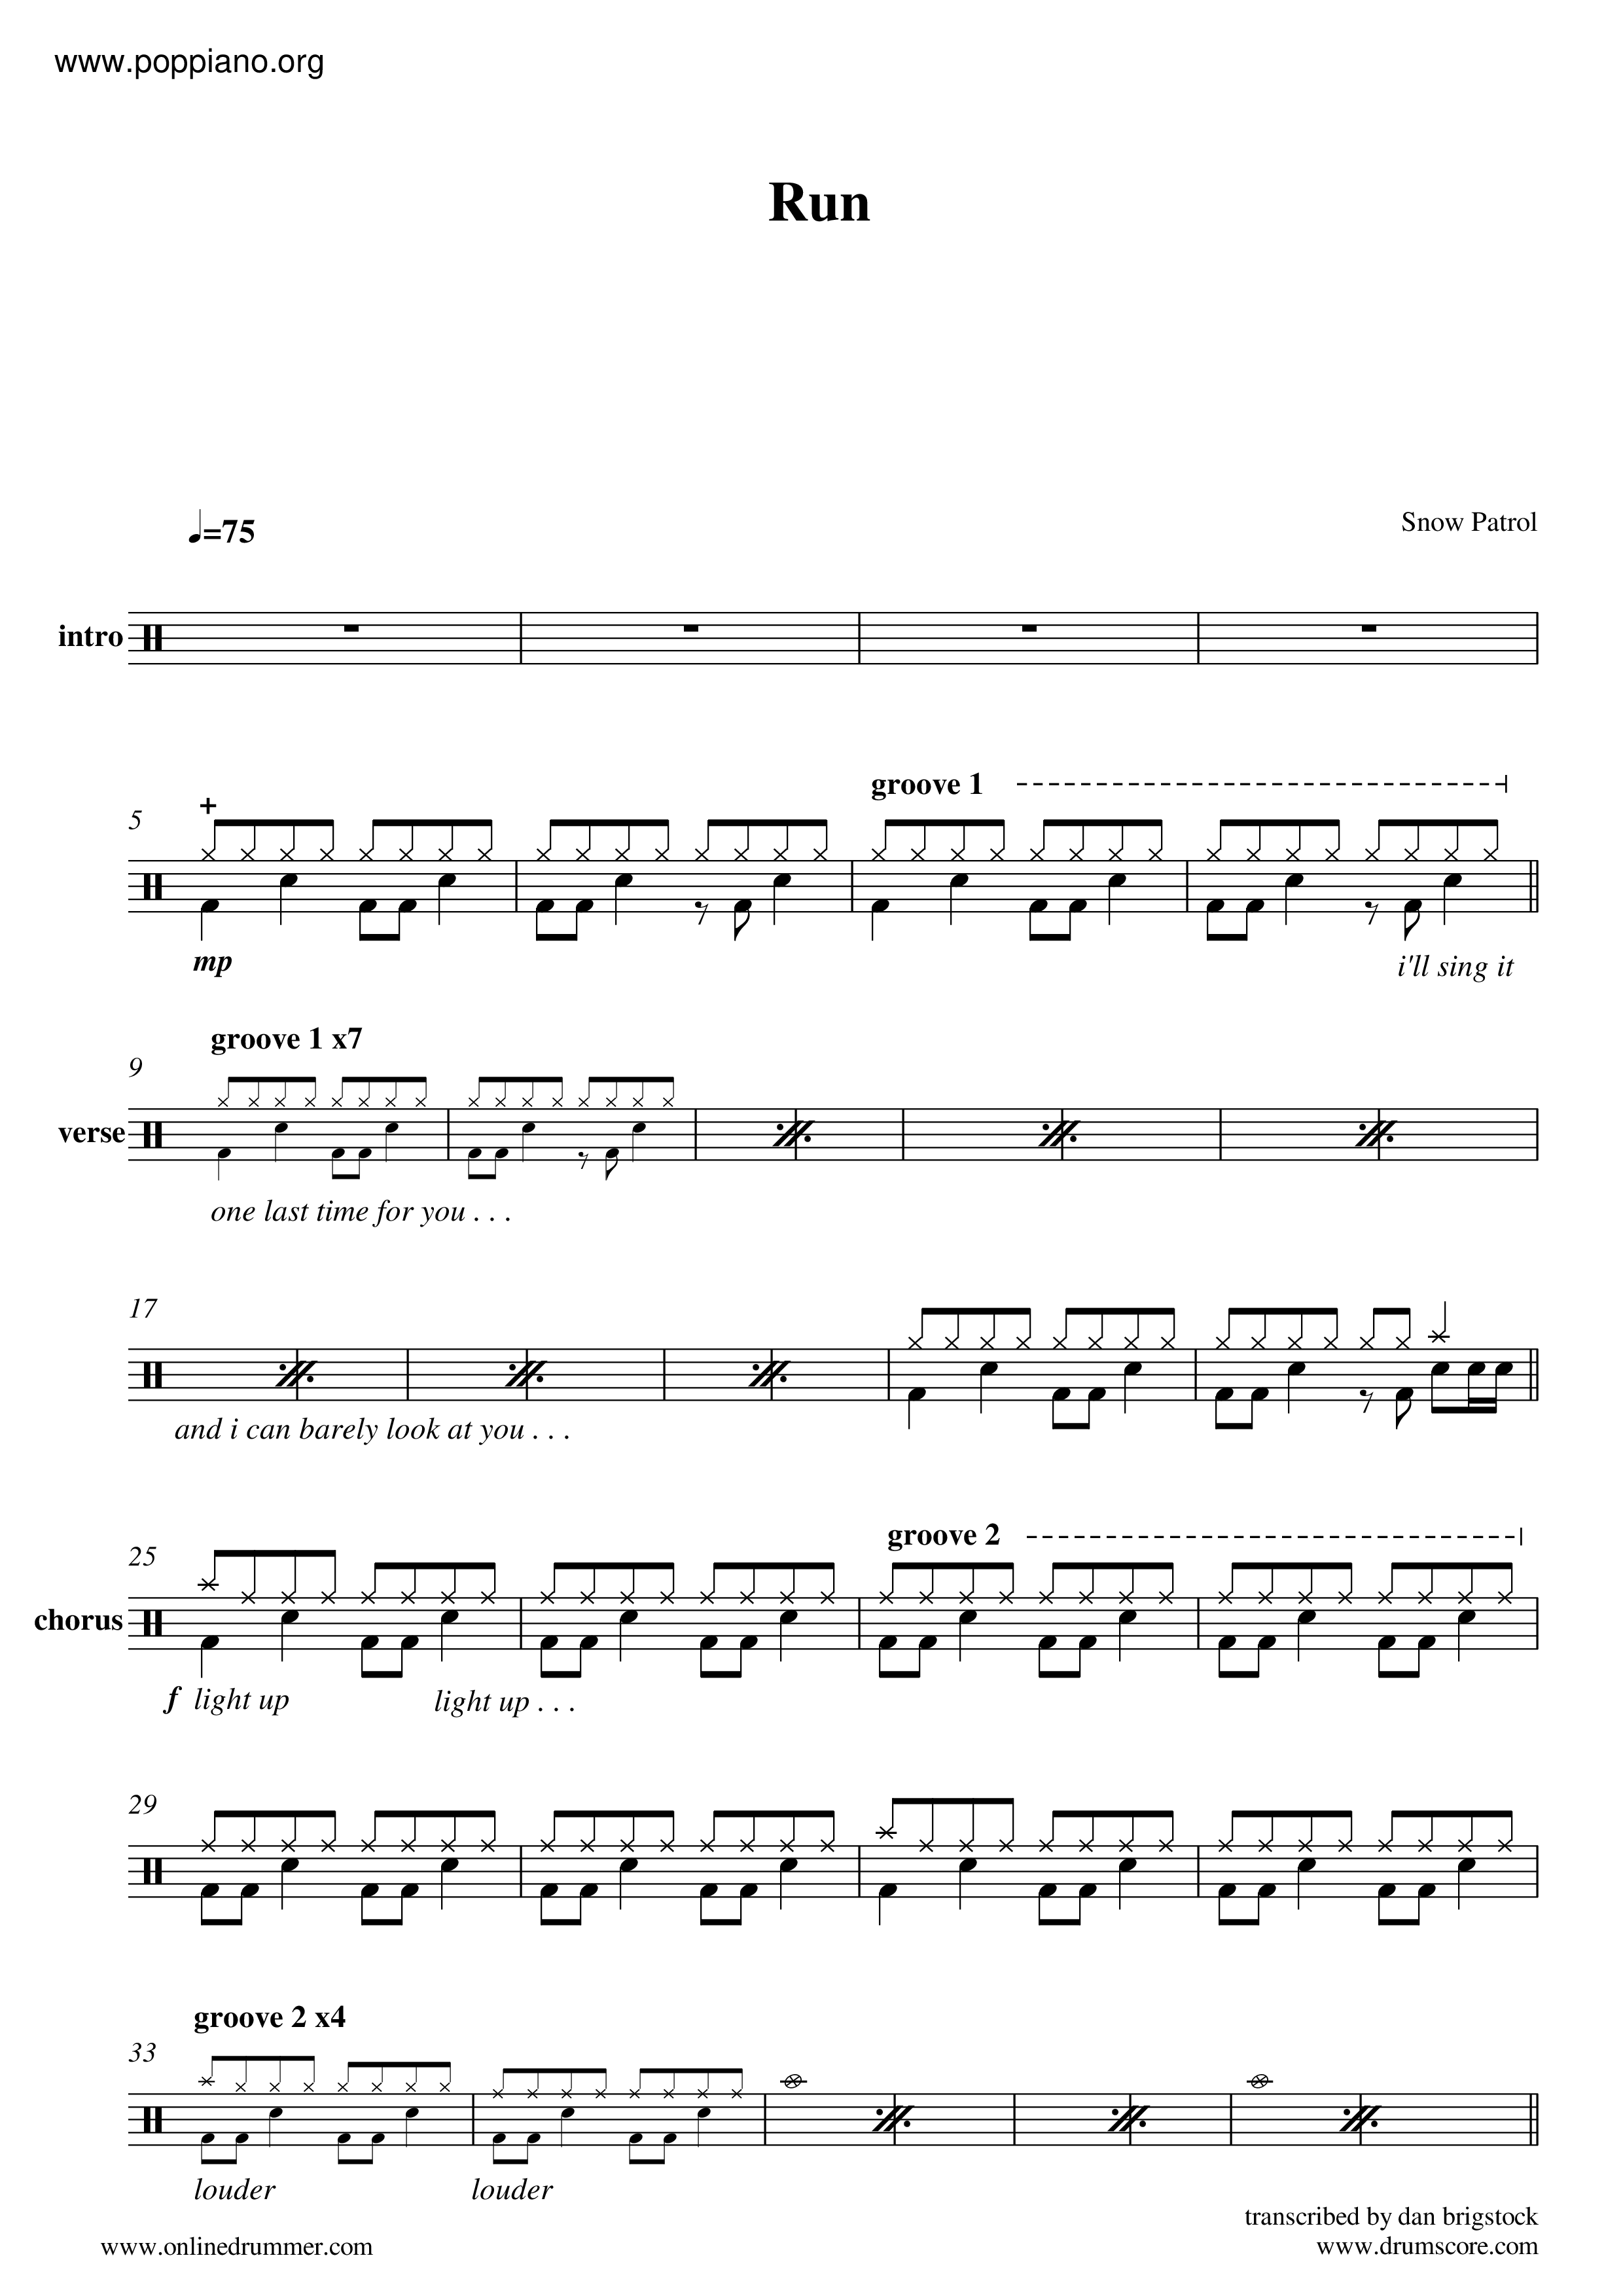 ☆ Snow Patrol-Run Tab pdf, Free Score Download ☆